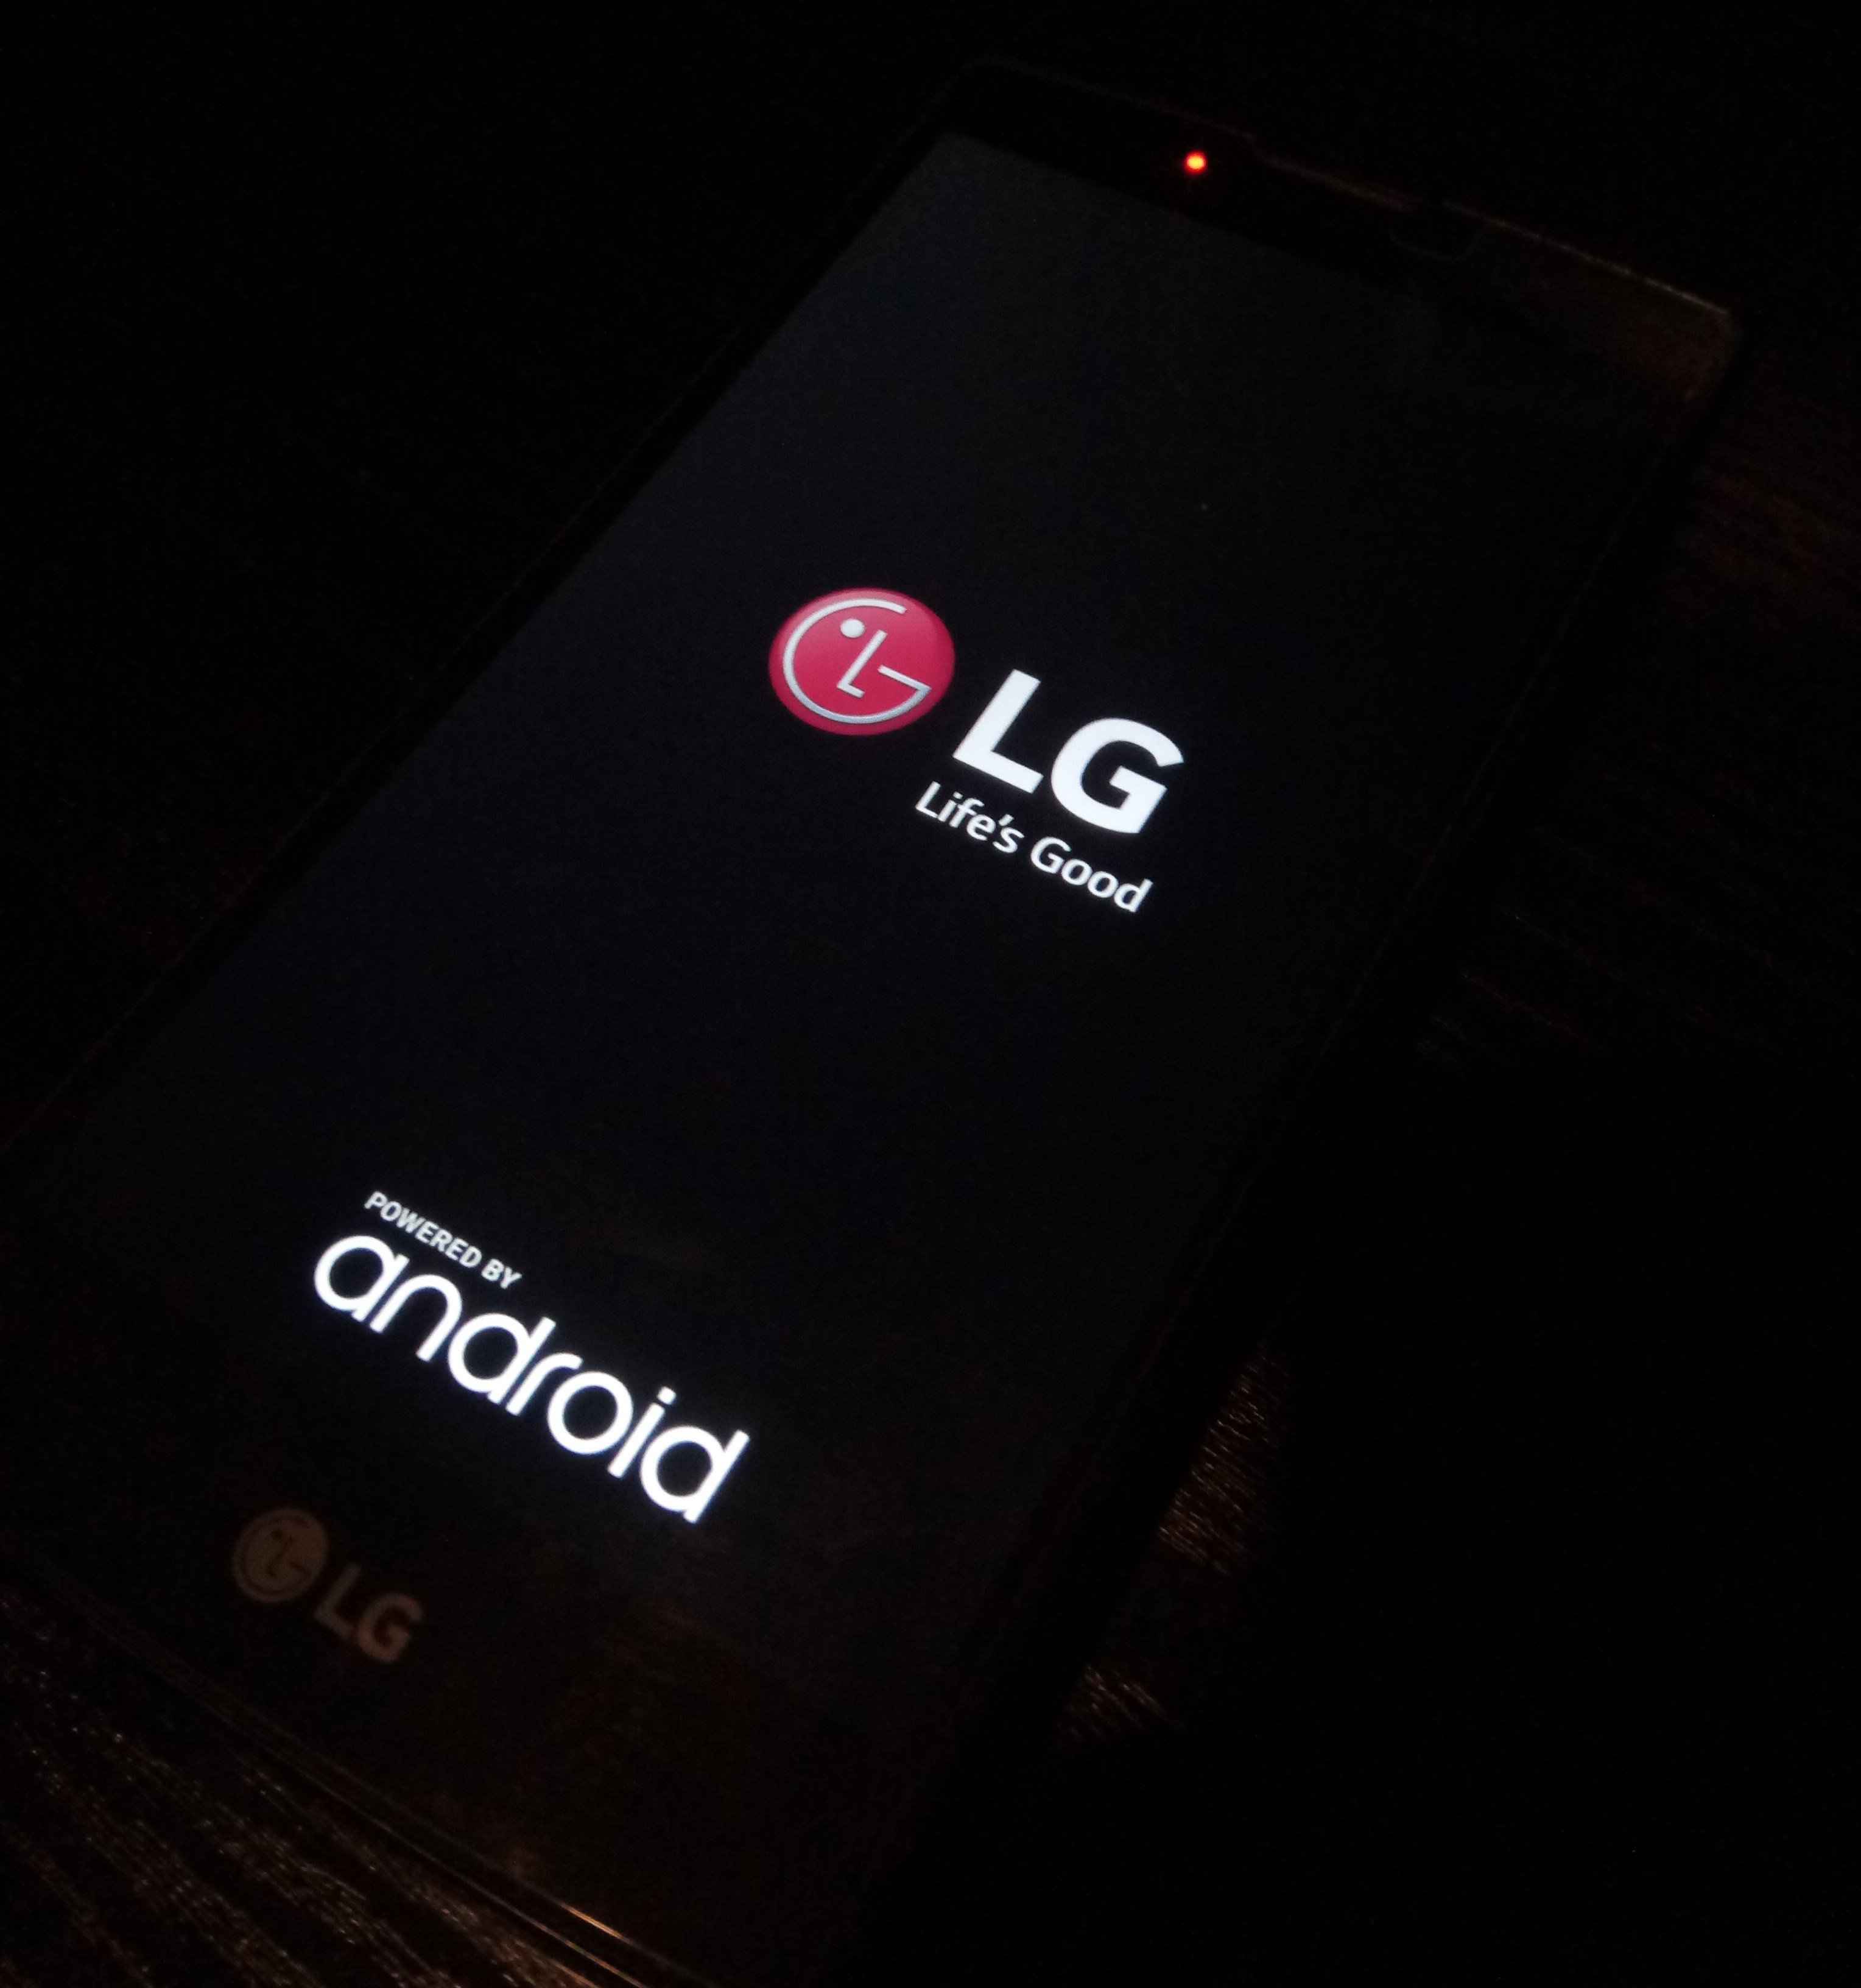 lg-g4c-logo-stuck